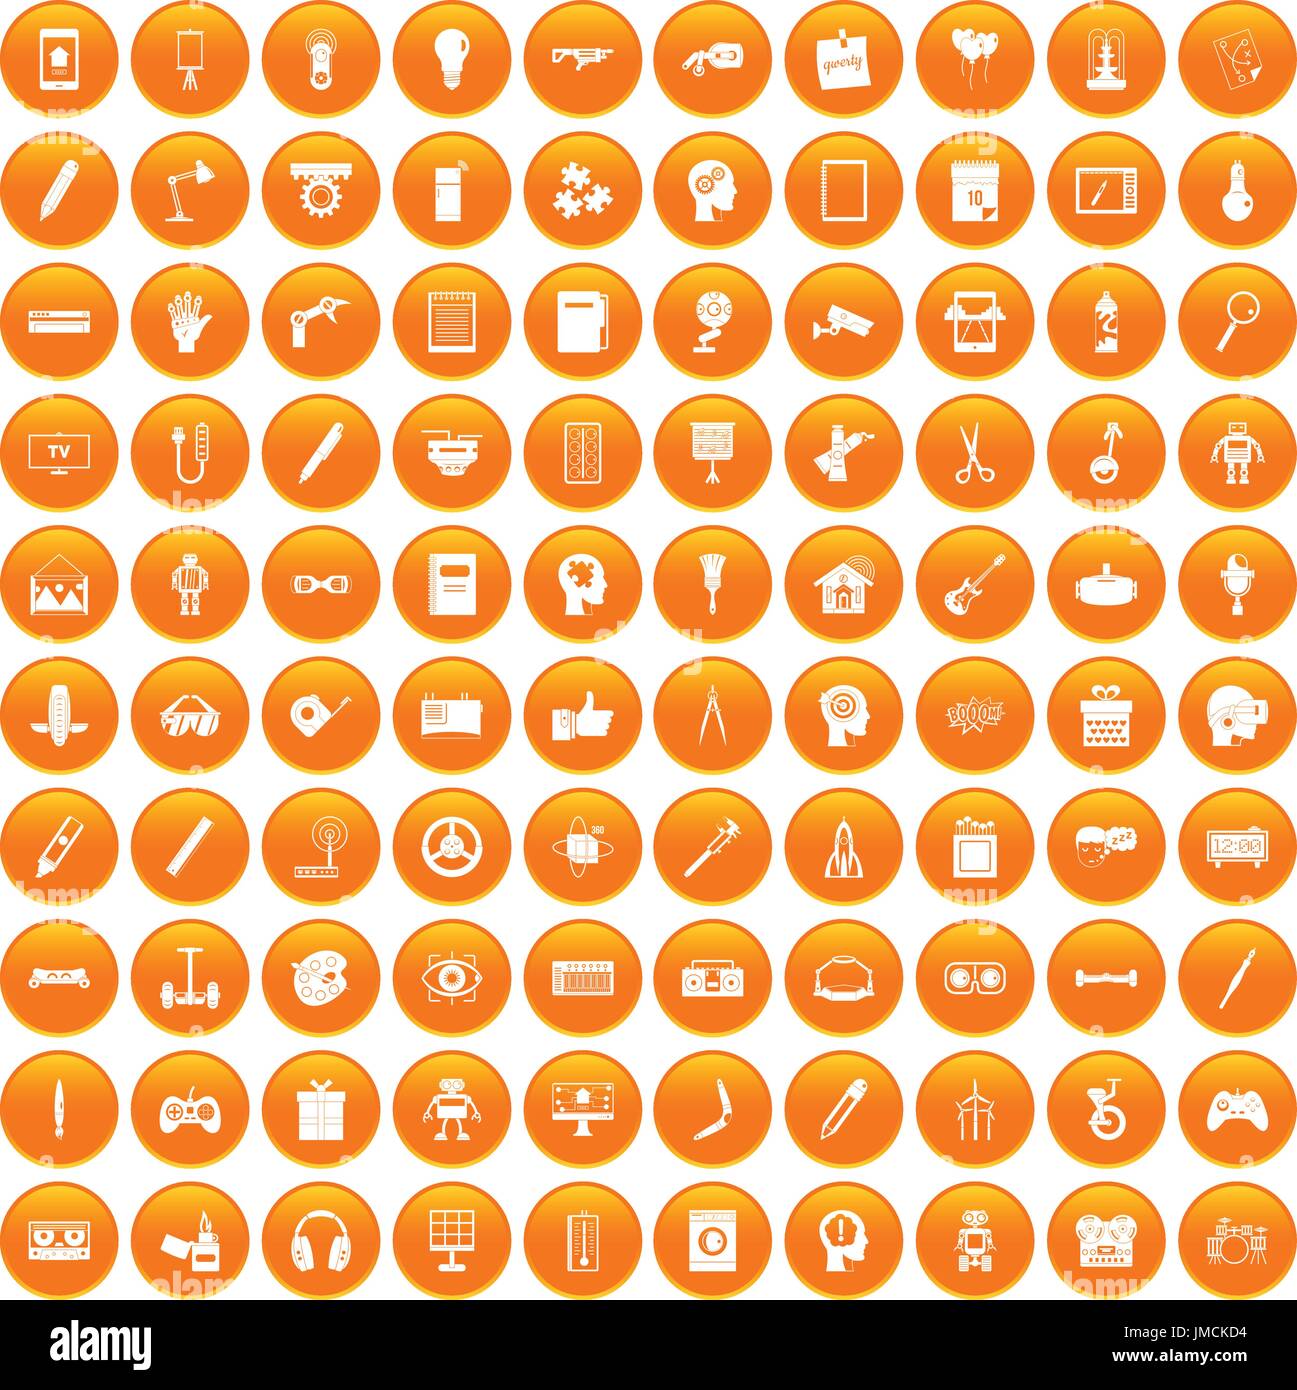 100 kreative Idee Icons set orange Stock Vektor